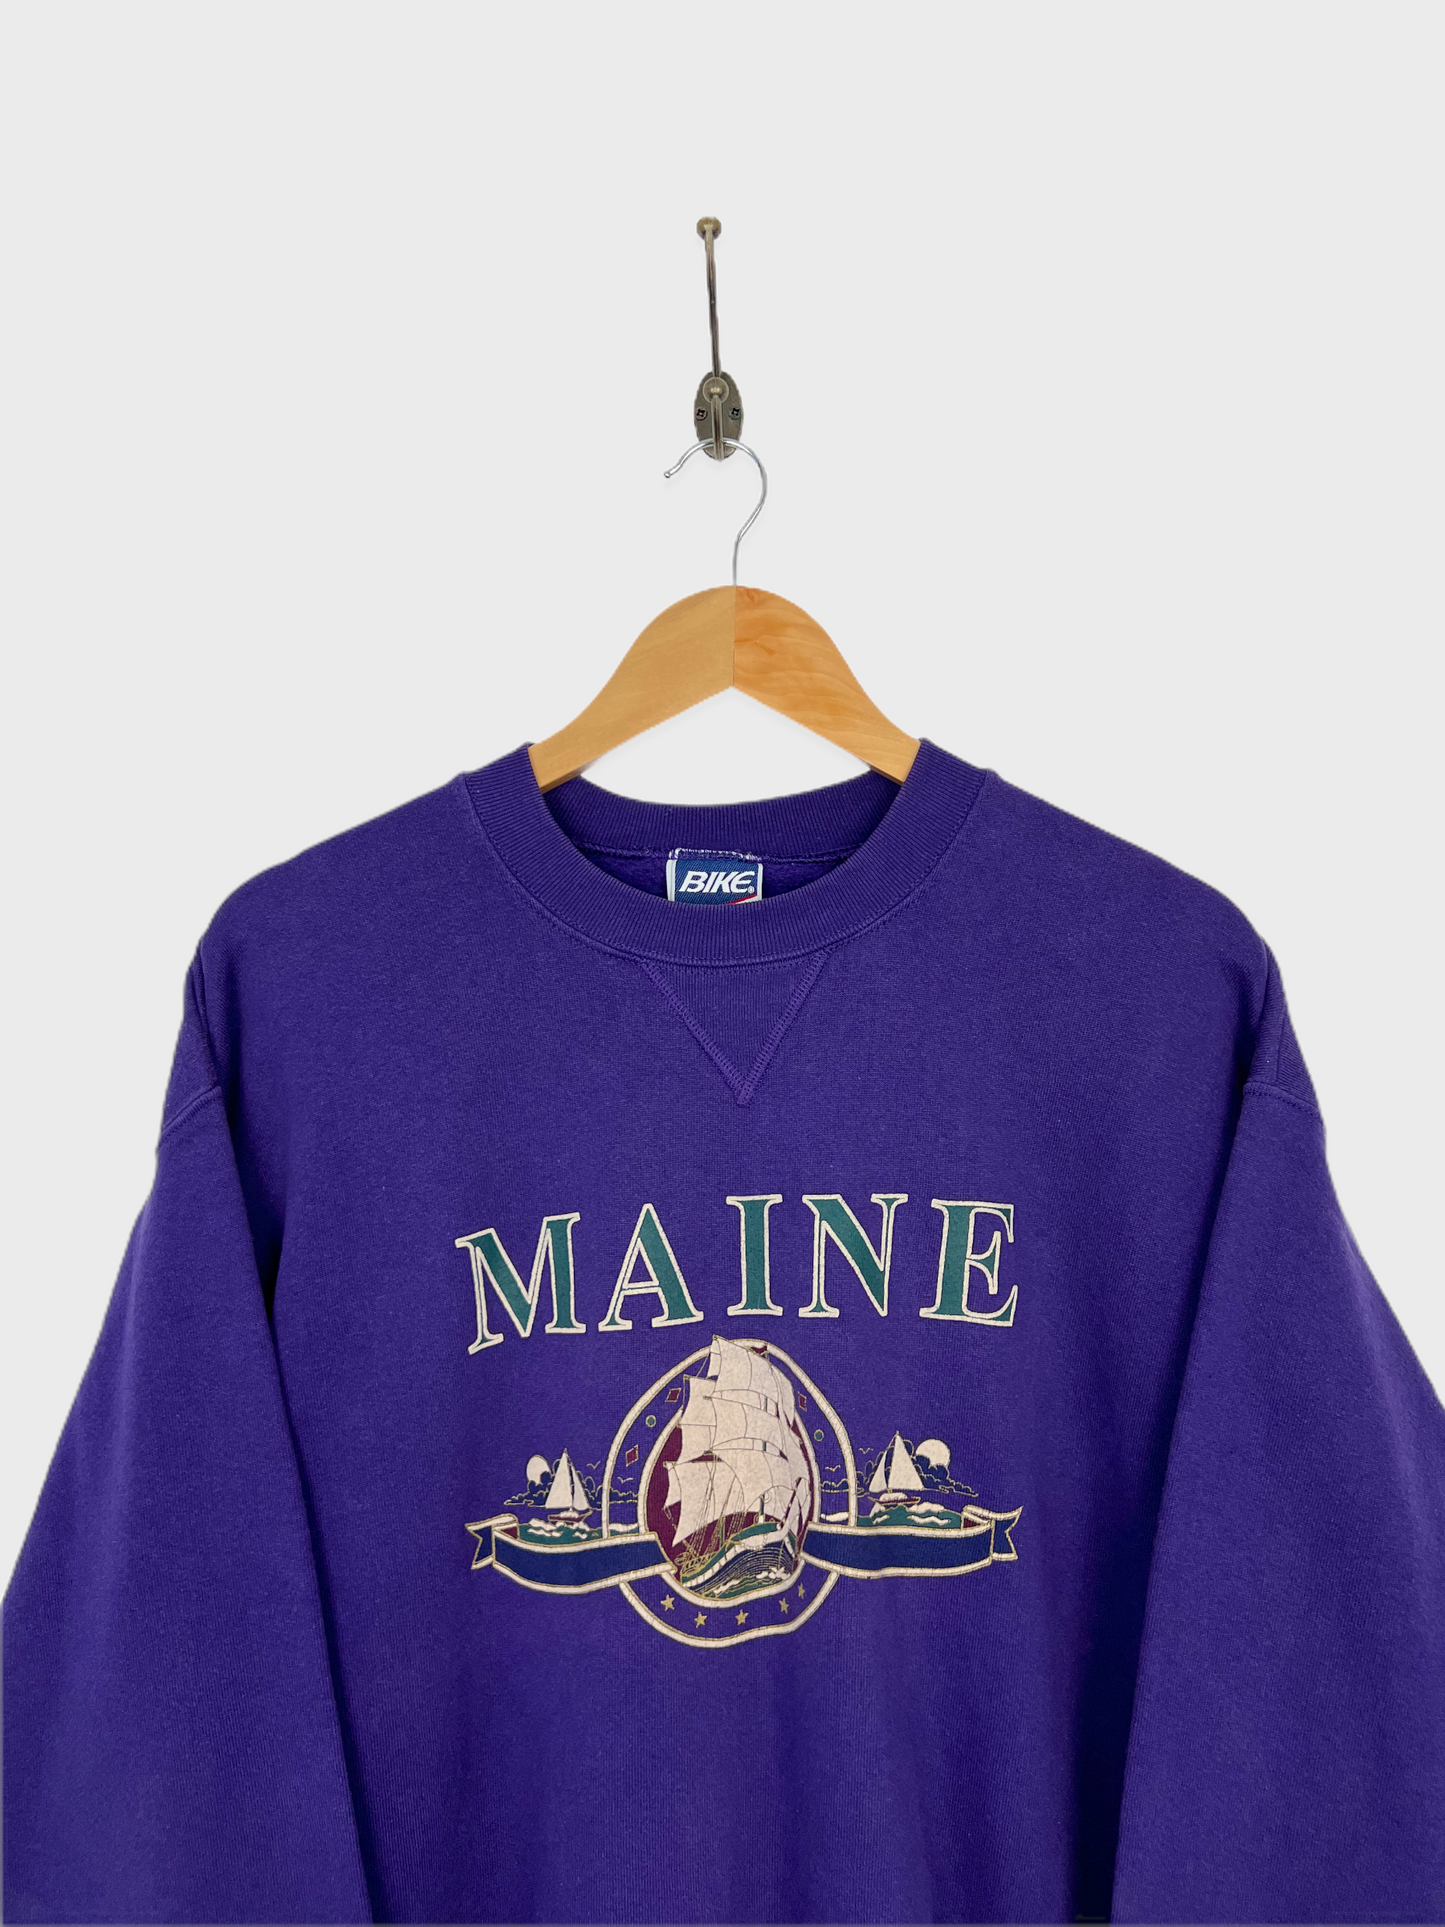 90's Maine USA Made Vintage Sweatshirt Size 8